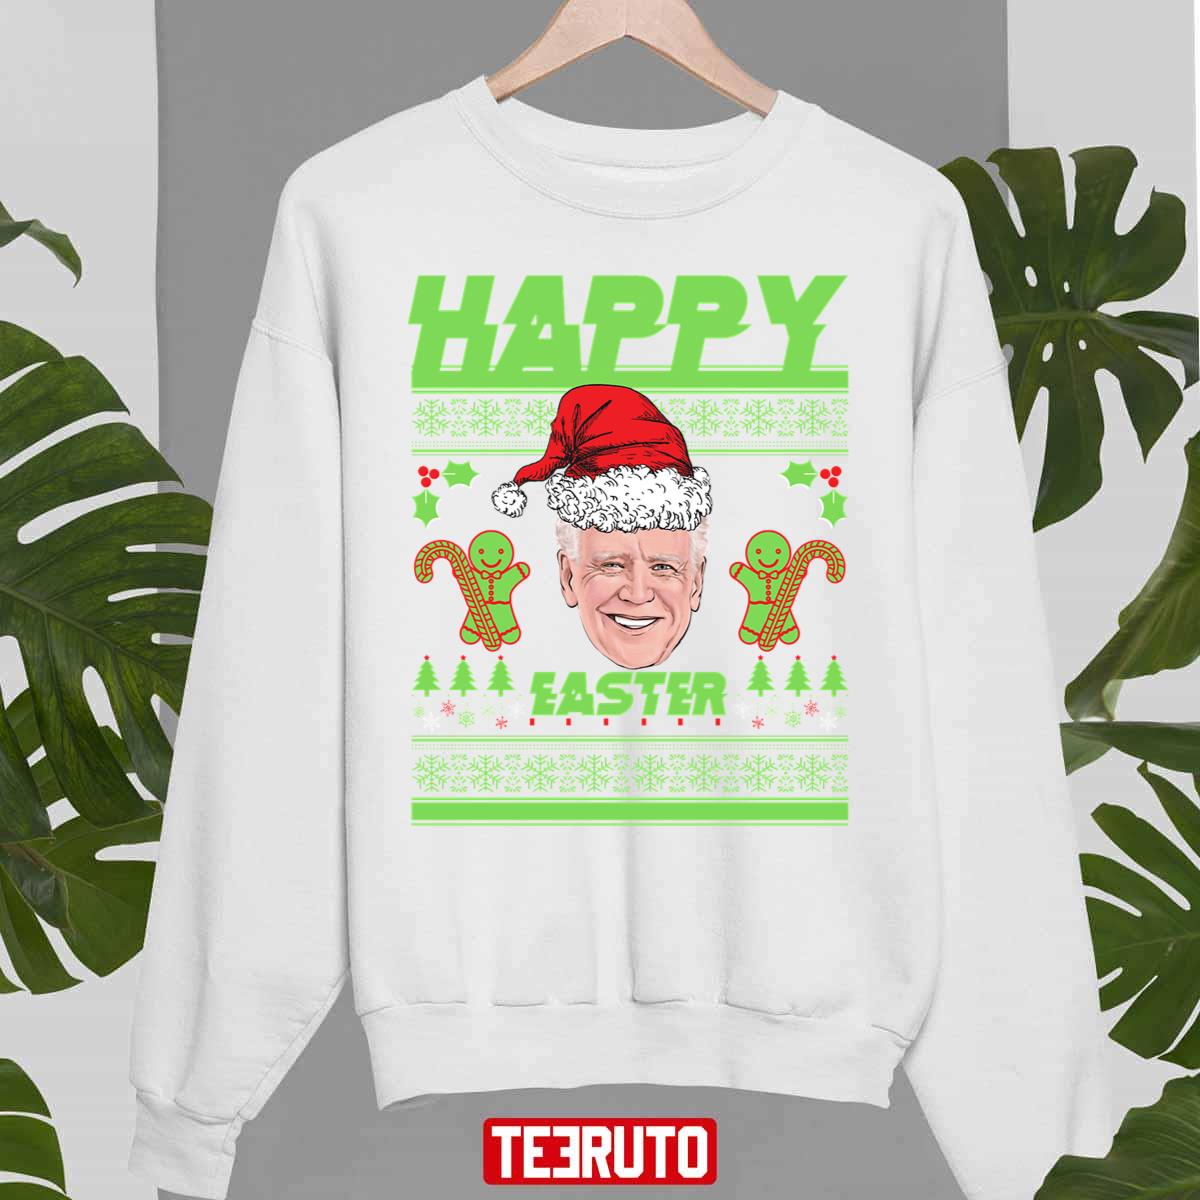 Joe Biden's Funny Easter Republican Christmas Pattern Design Unisex T-shirt